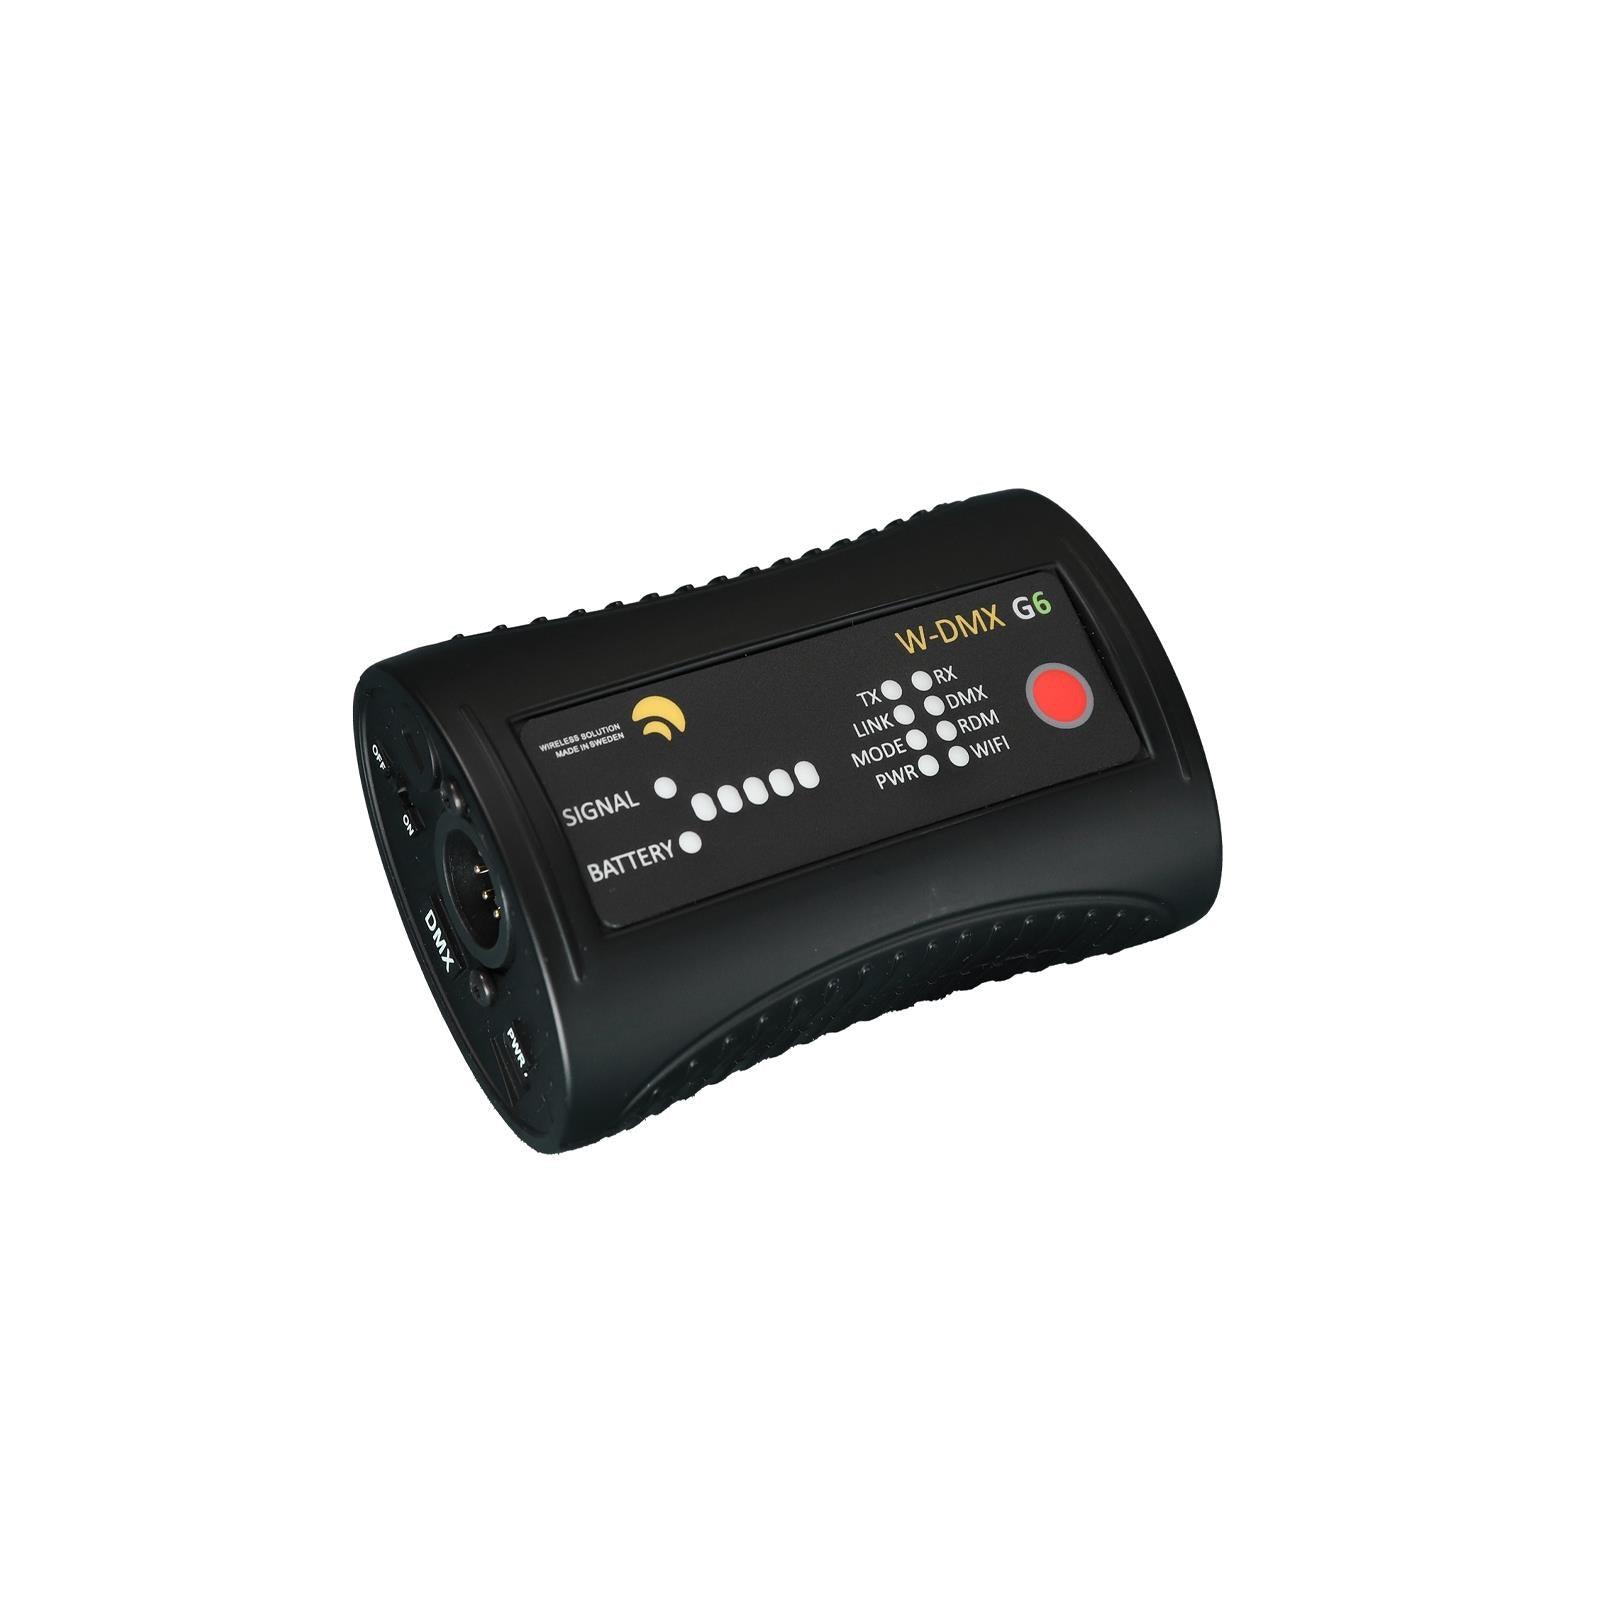 Wireless Solution W-DMX Micro F-1 Lite G6 Transceiver - DY Pro Audio